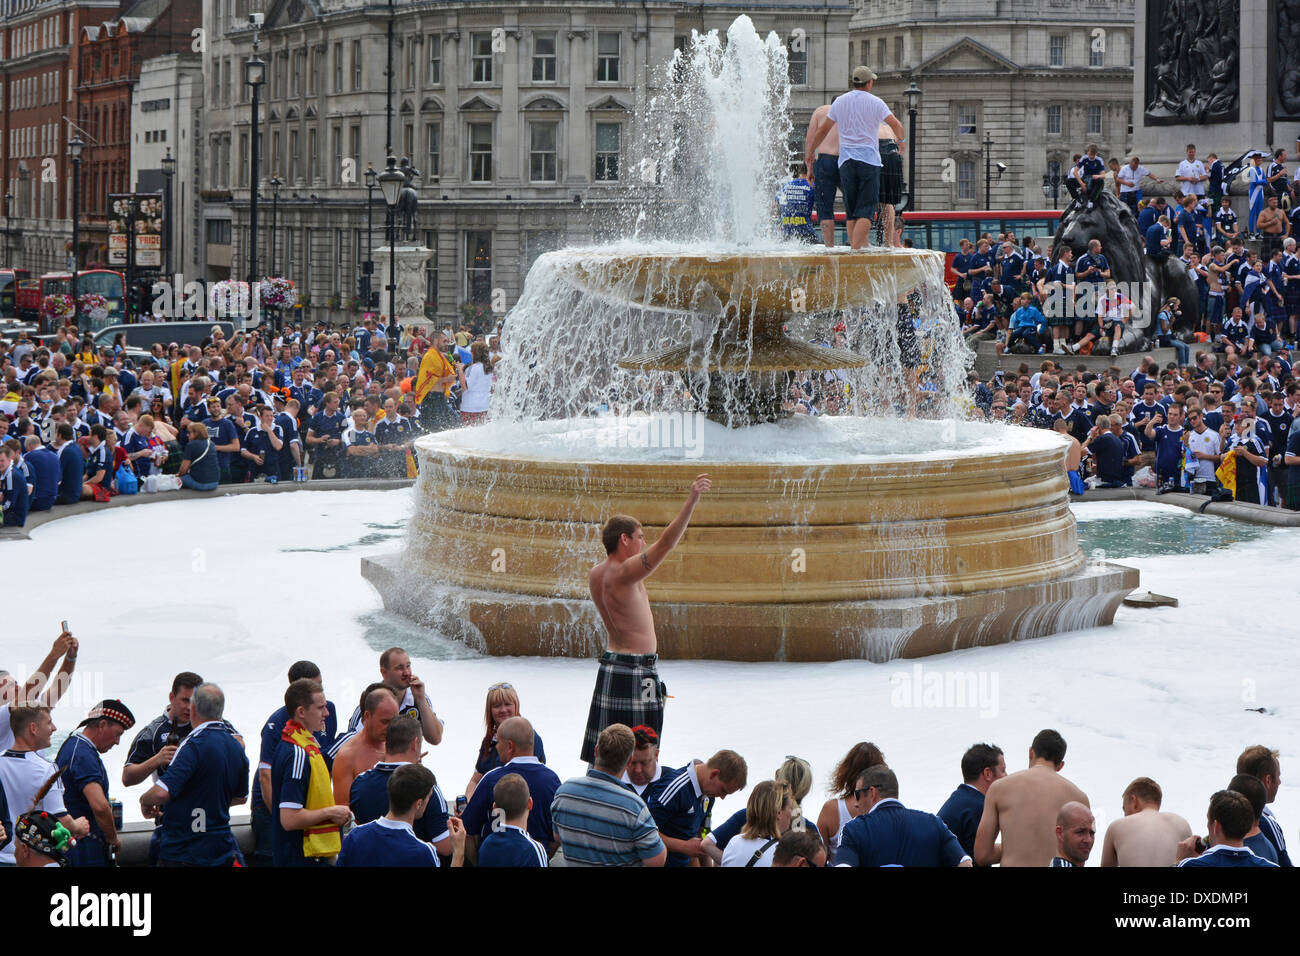 Scottish football fans on top of fountain crowds around Trafalgar Square before international match at Wembley between England & Scotland London UK Stock Photo